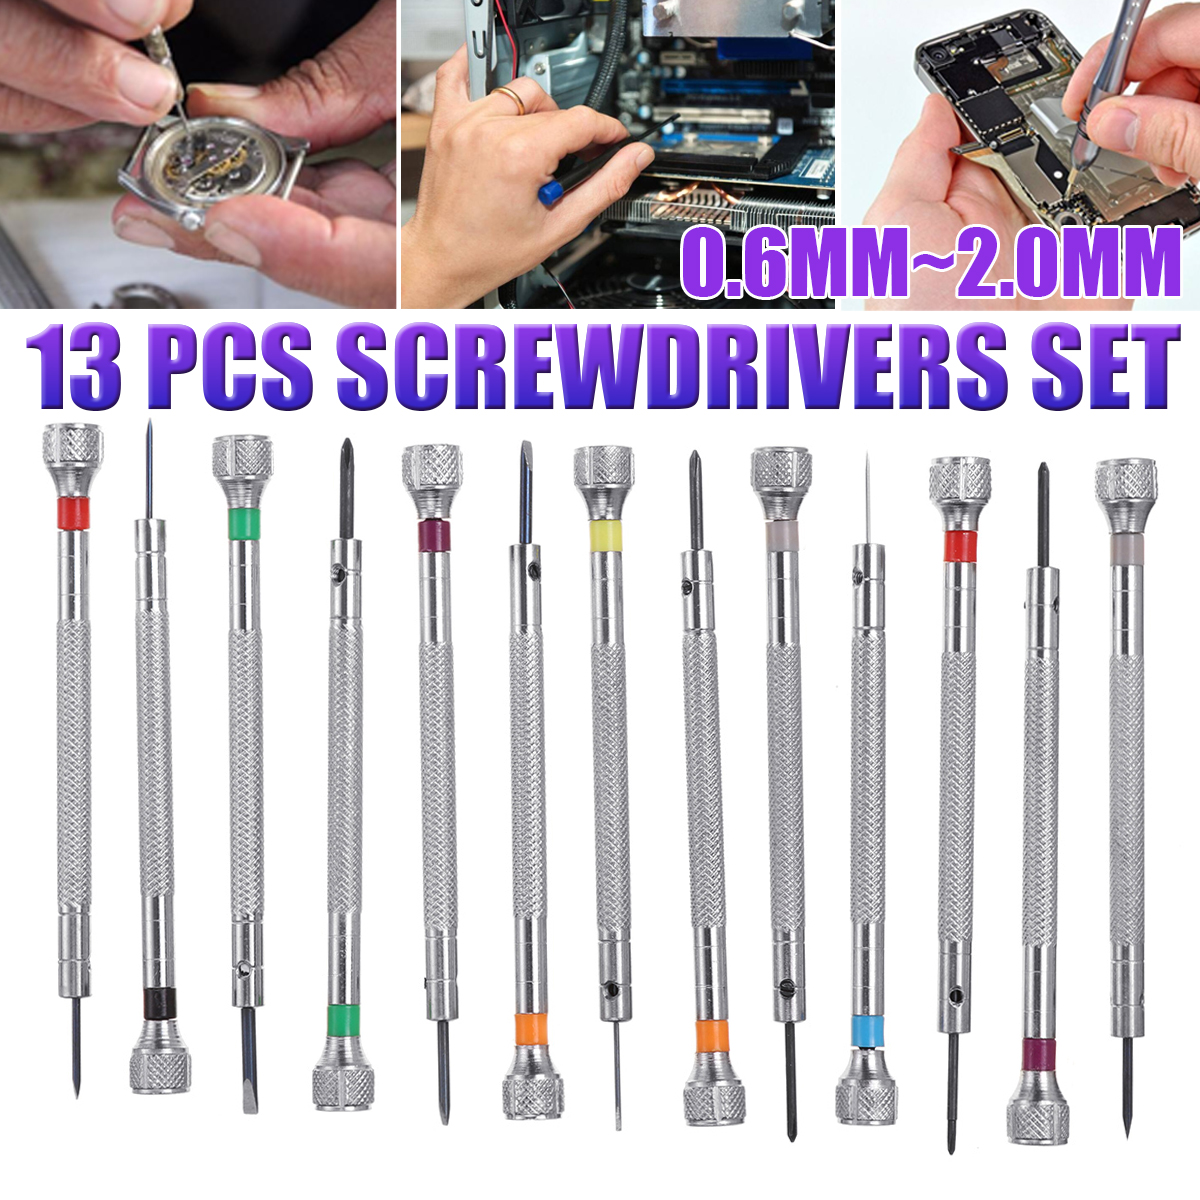 13pcs-06mm20mm-Watchmakers-Eyeglasses-Watch-Screwdriver-Precision-Repair-Tools-Set-1734048-2